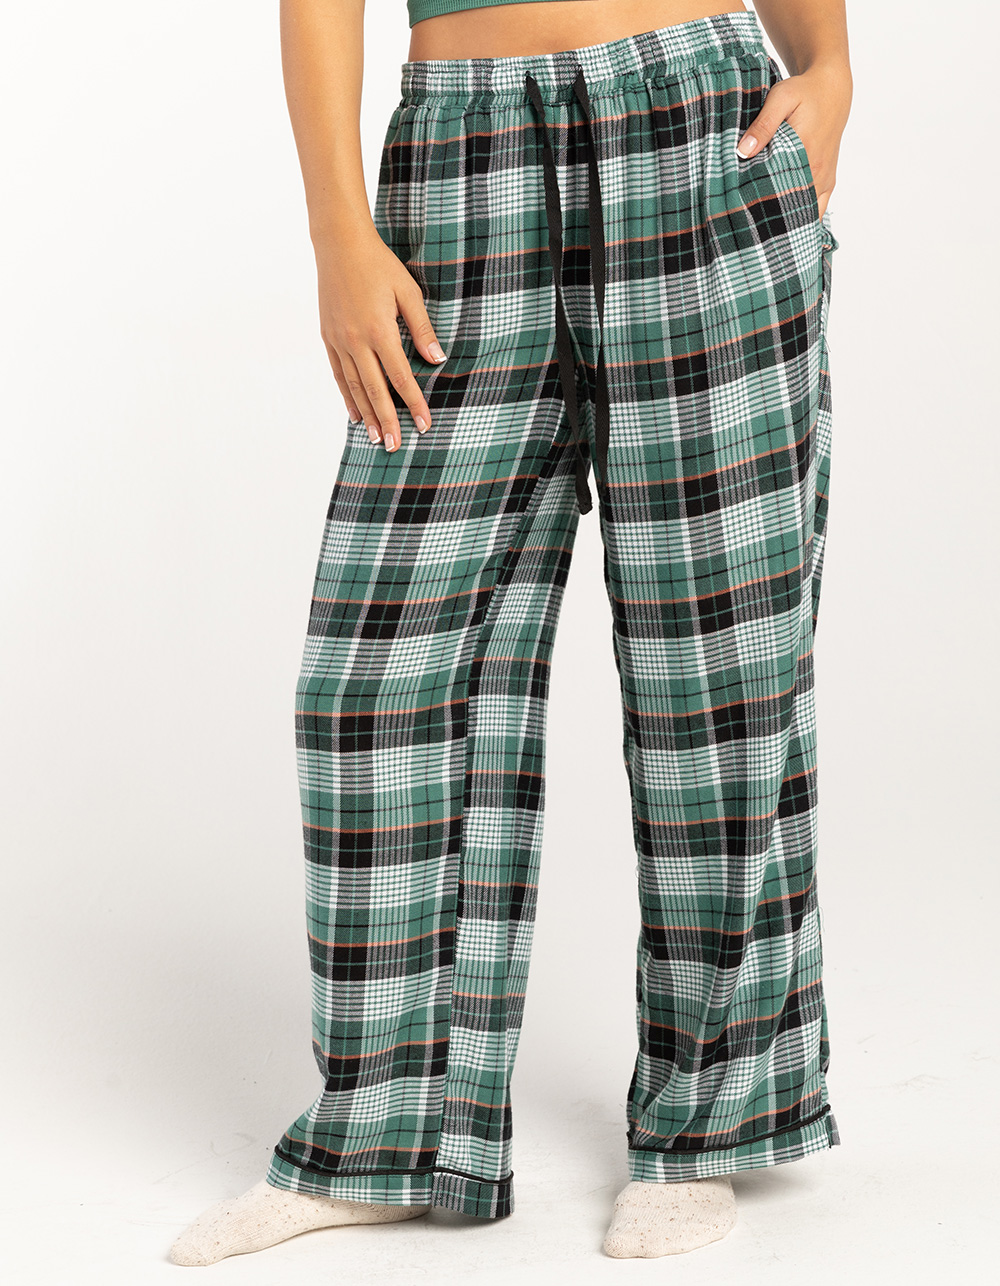 Lucky Brand Plaid Pajama Pants for Women